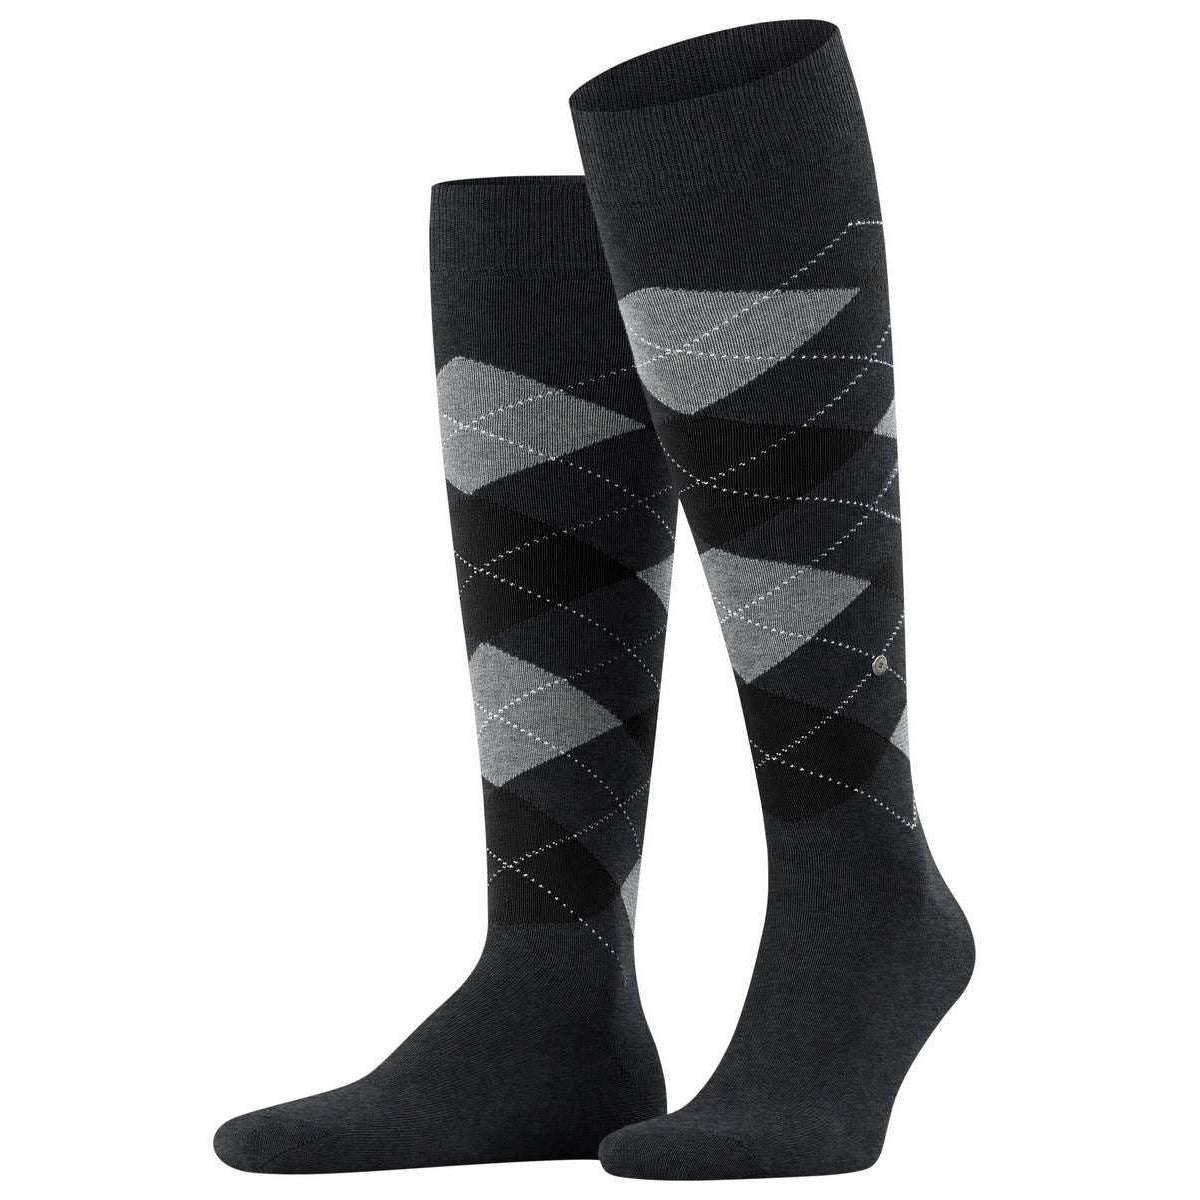 Burlington King Knee High Socks - New Grey